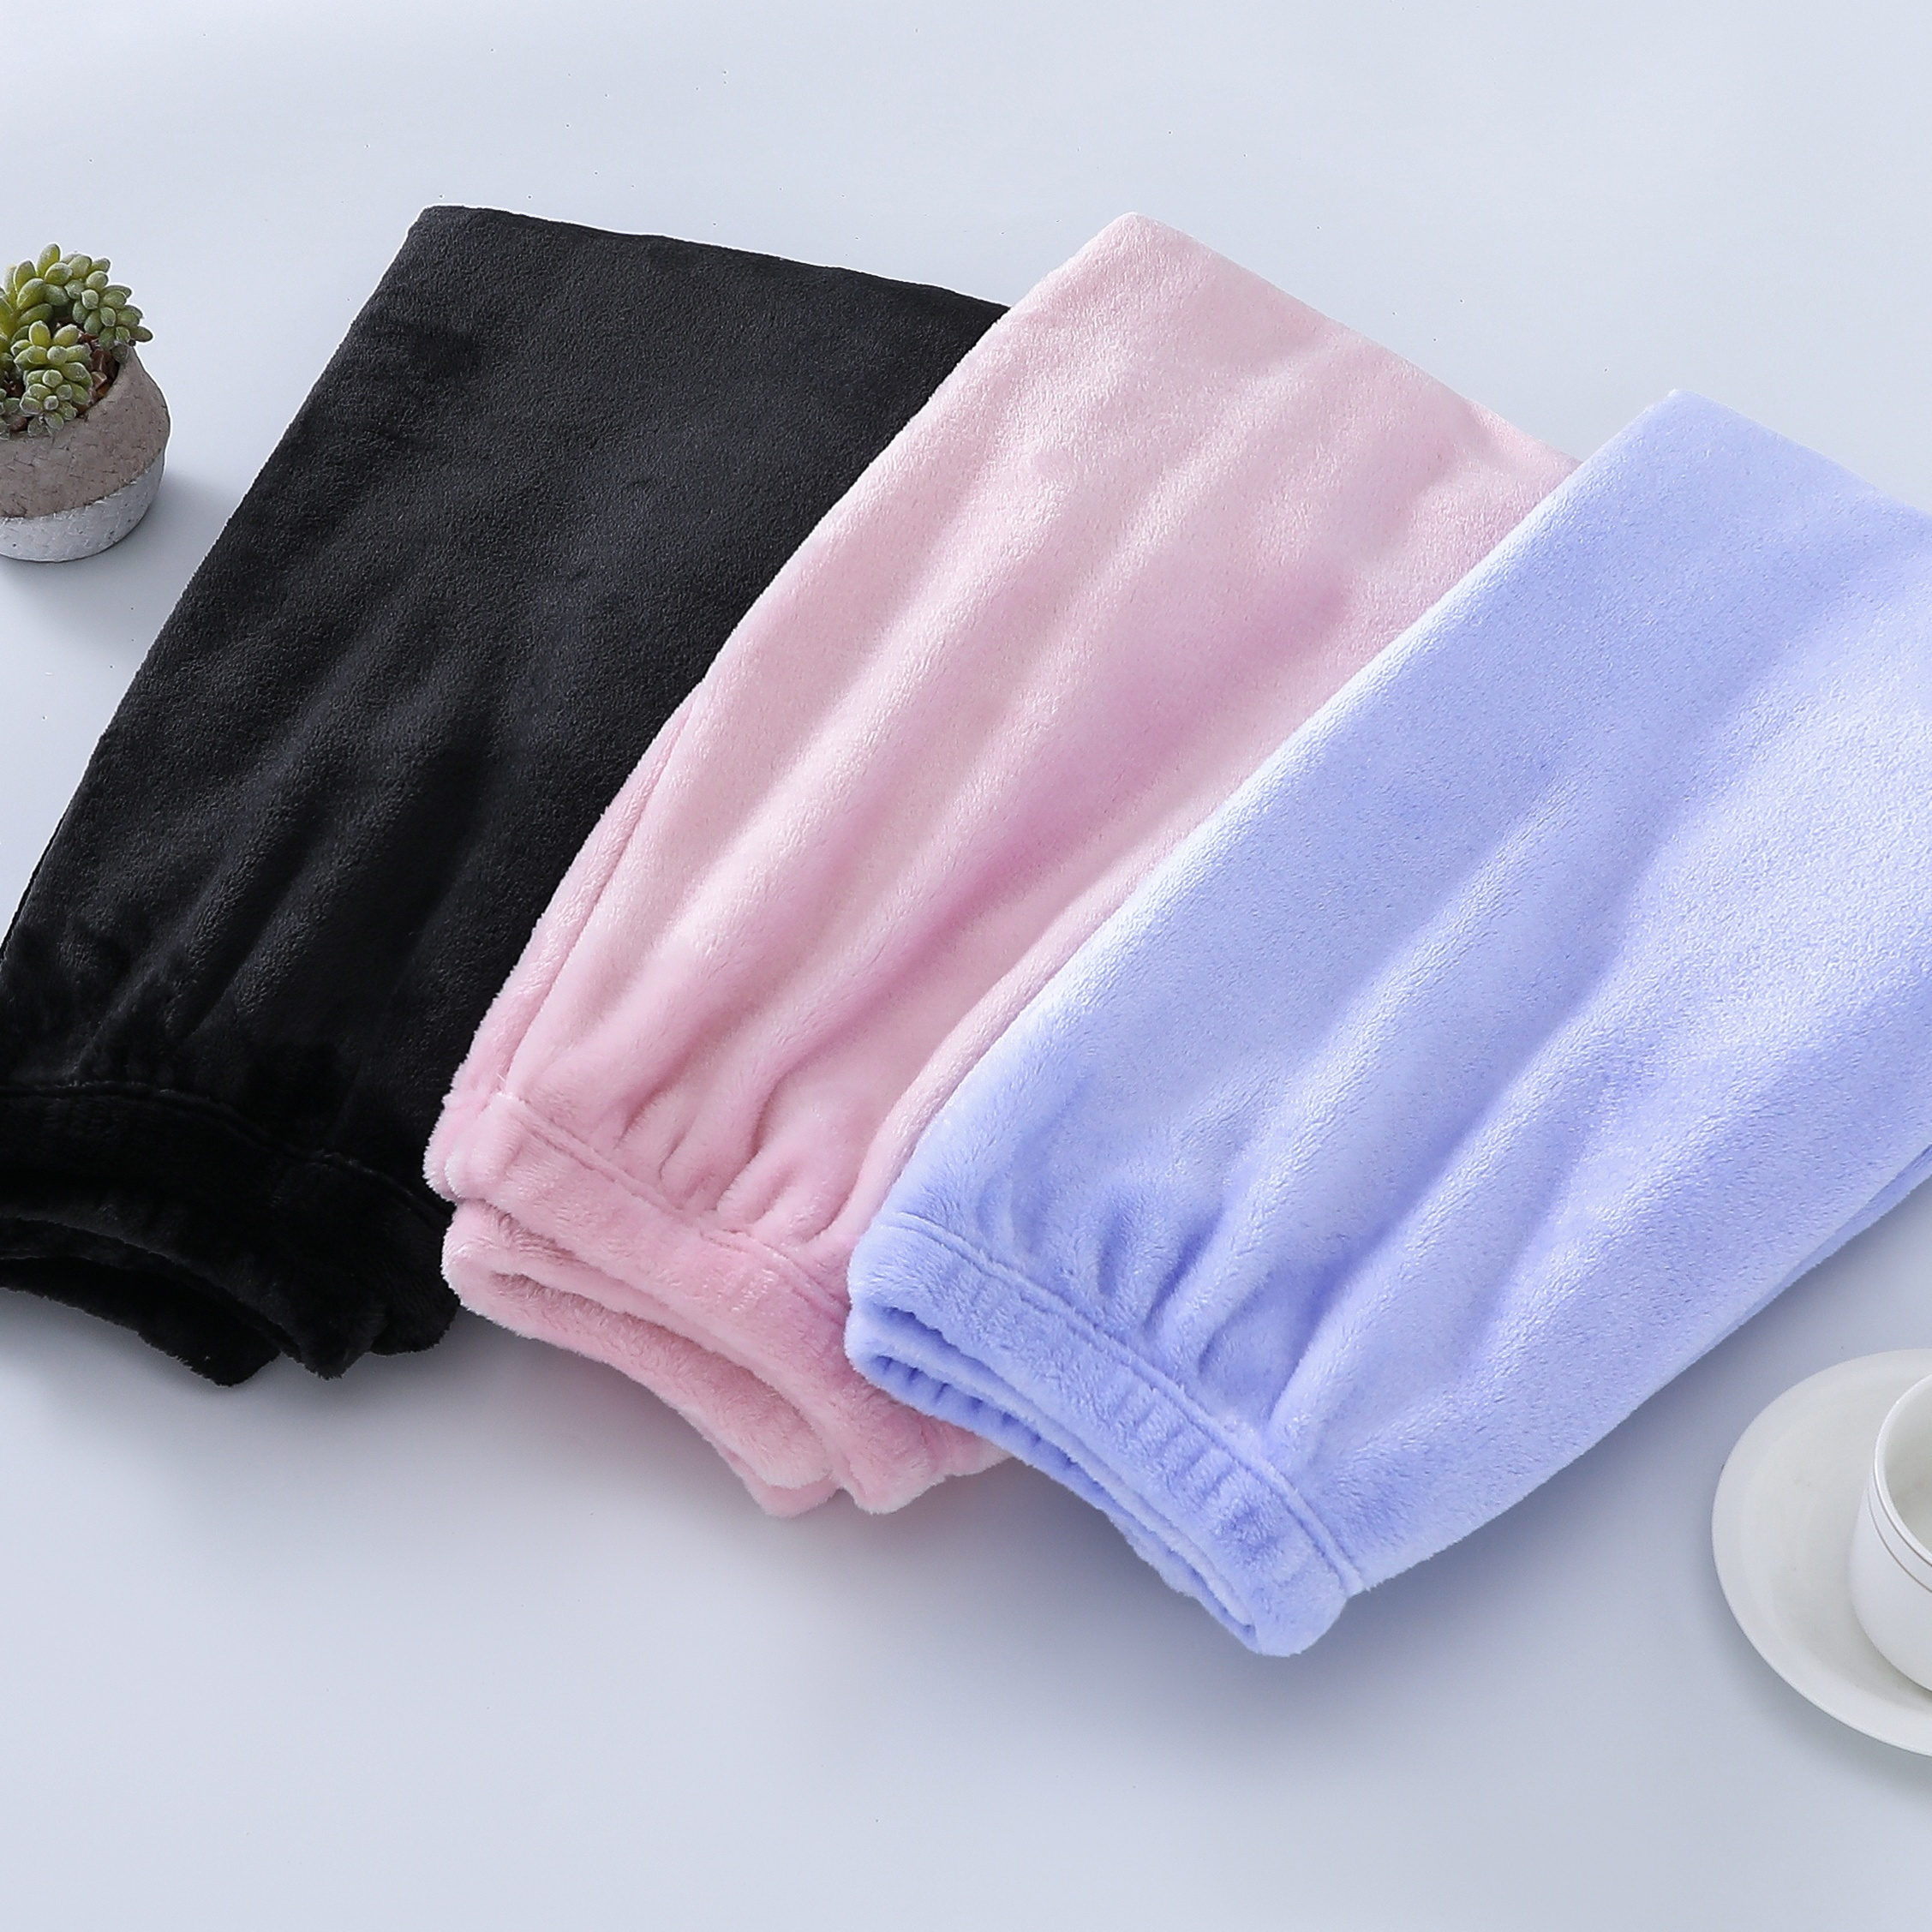 

3pcs Solid Fuzzy Sleep Bottoms, Warm & Cozy Home Sleep Pants, Women's Sleepwear & Loungewear